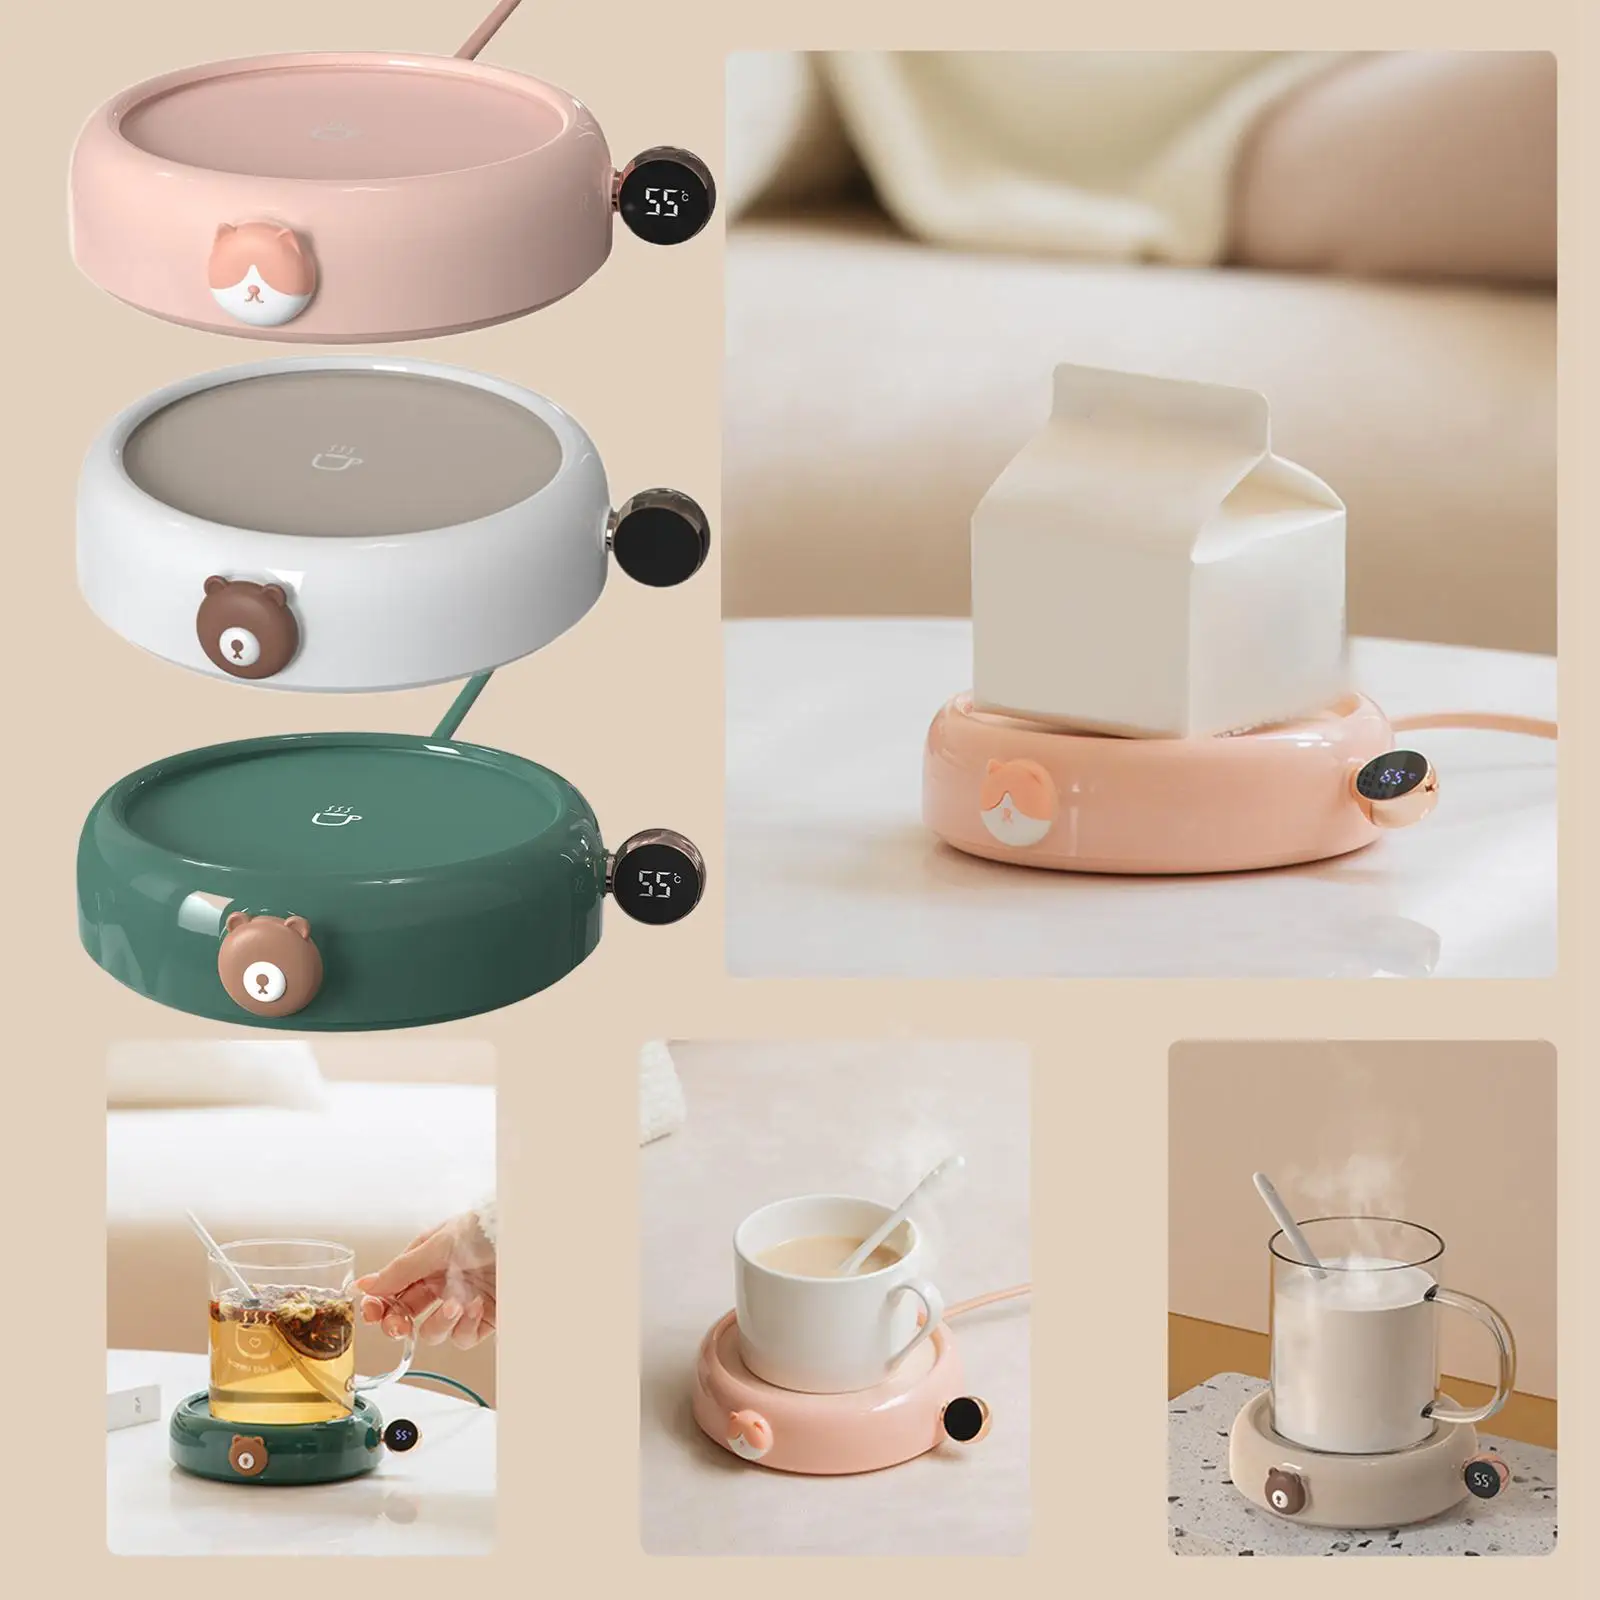 Beverage Heater Digital Display Thermostatic for Coffee Milk Tea Beverage 5V